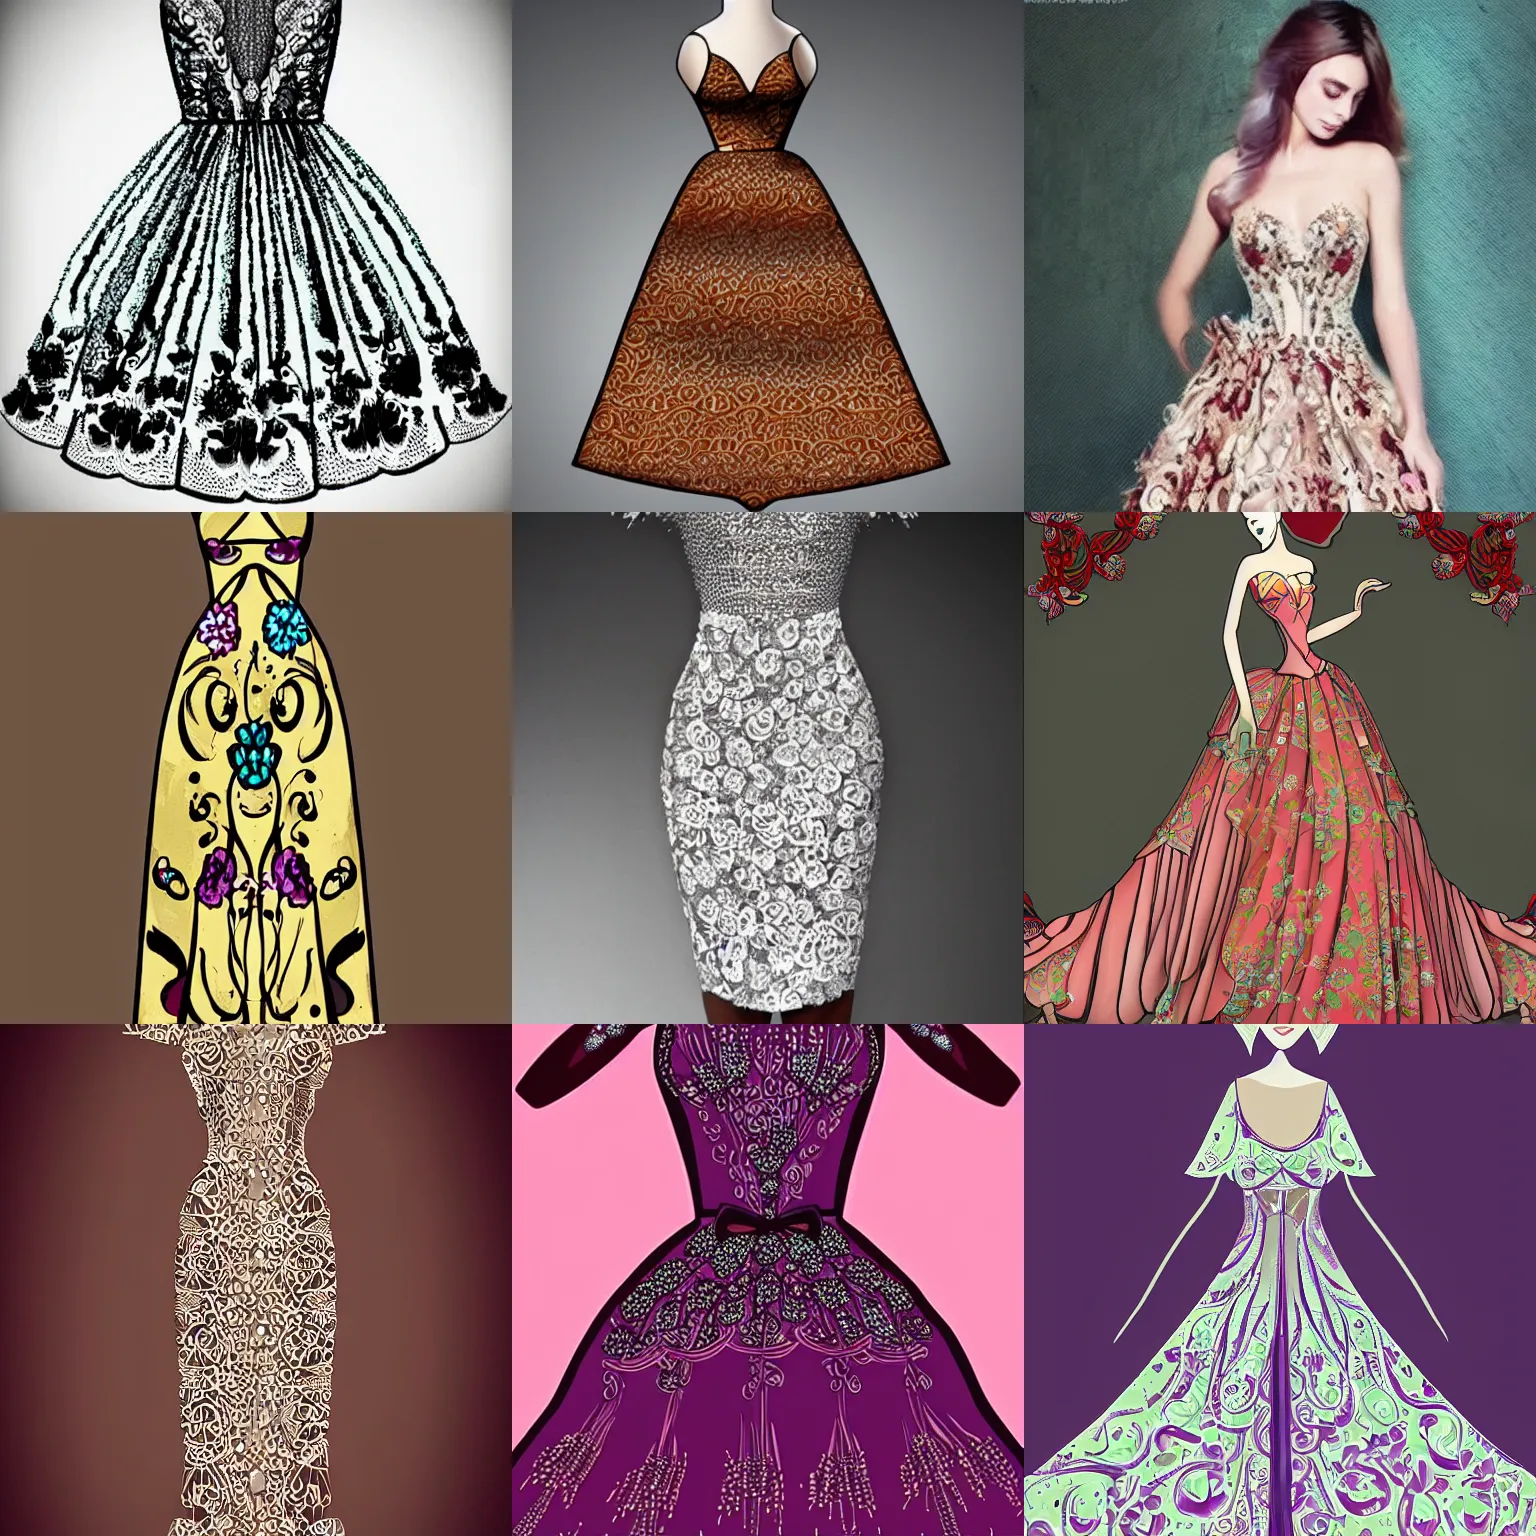 Prompt: beautiful dress, design, animation